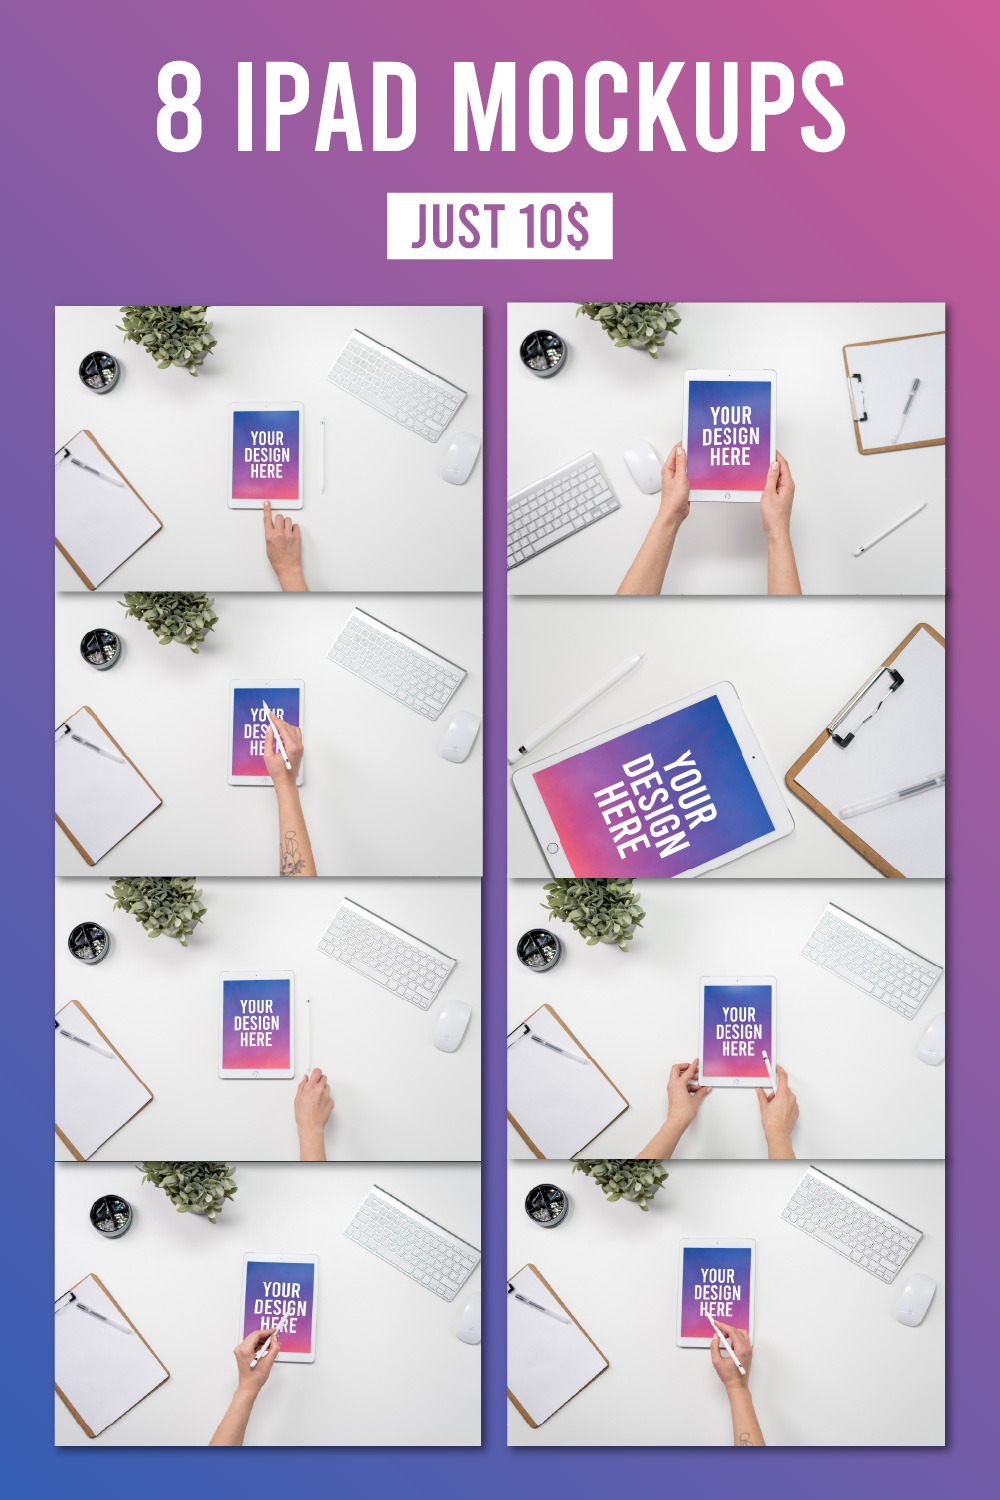 8 iPad Mockups For Procreate Pinterest collage image.